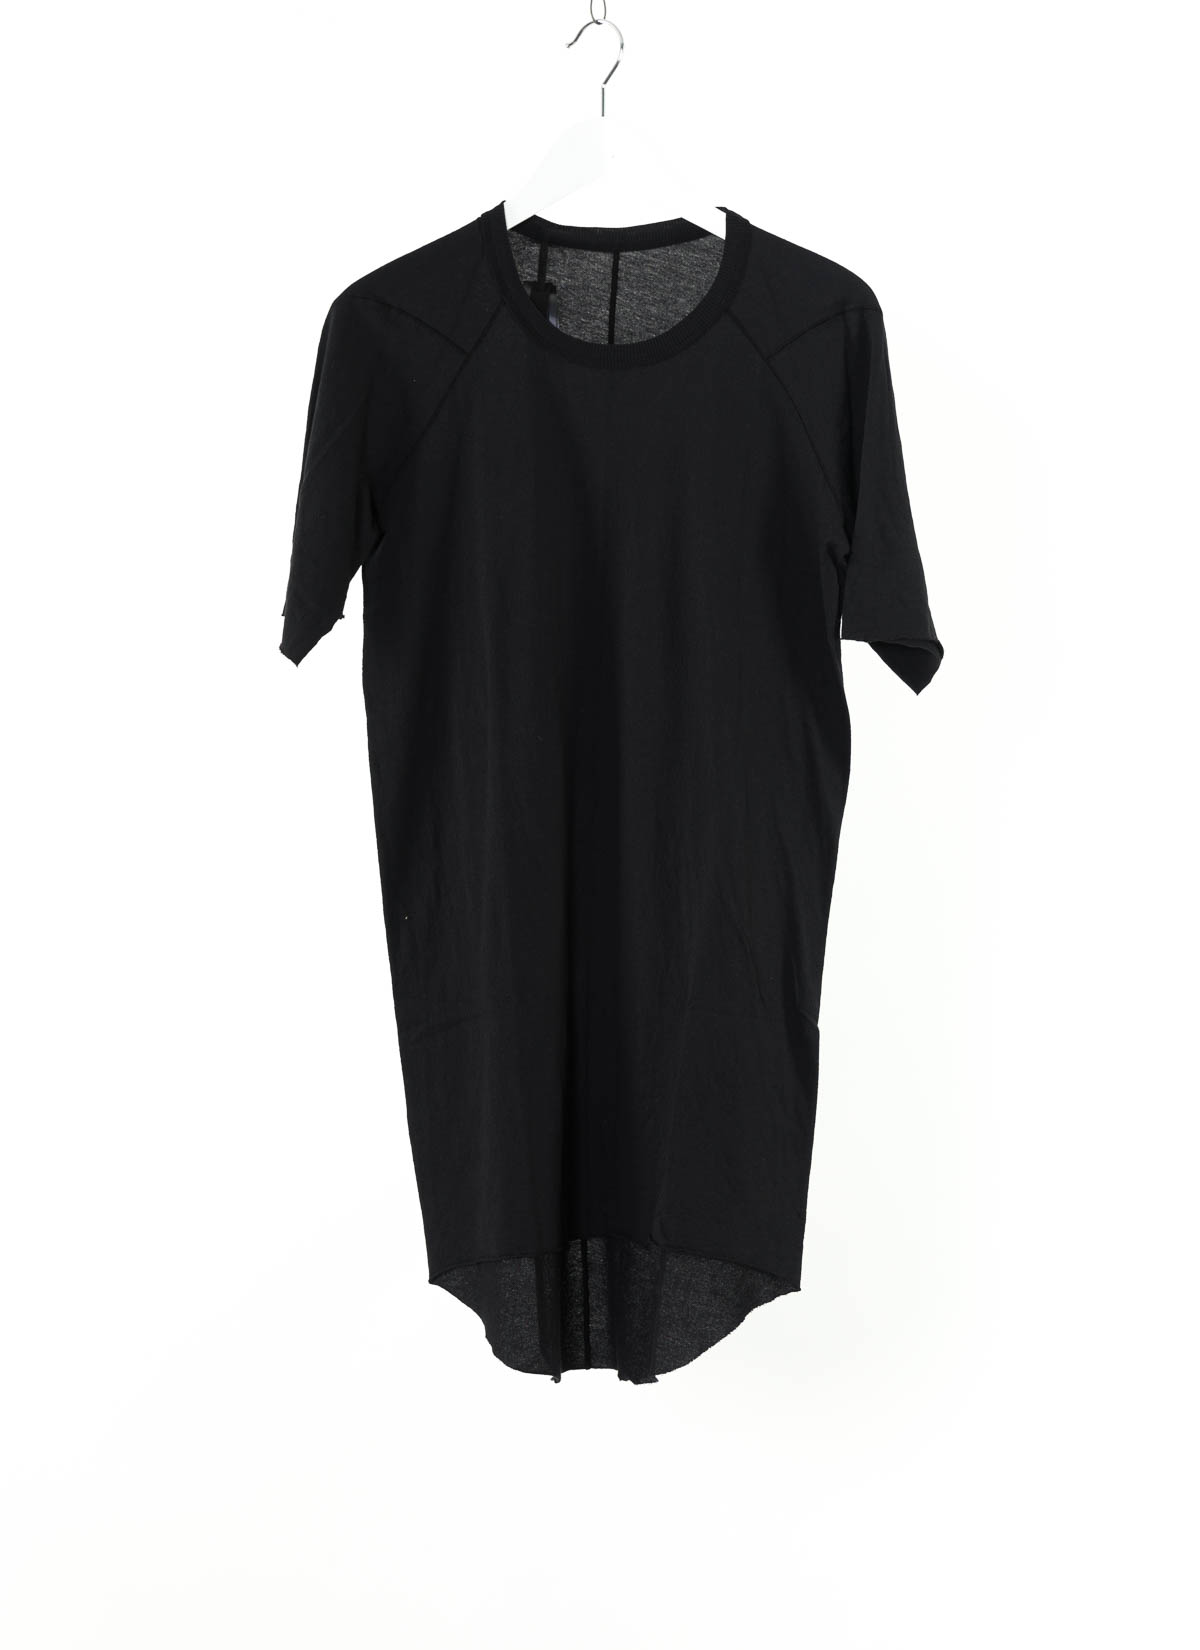 PROPOSITION Minimal Seam Shirt In Black - トップス